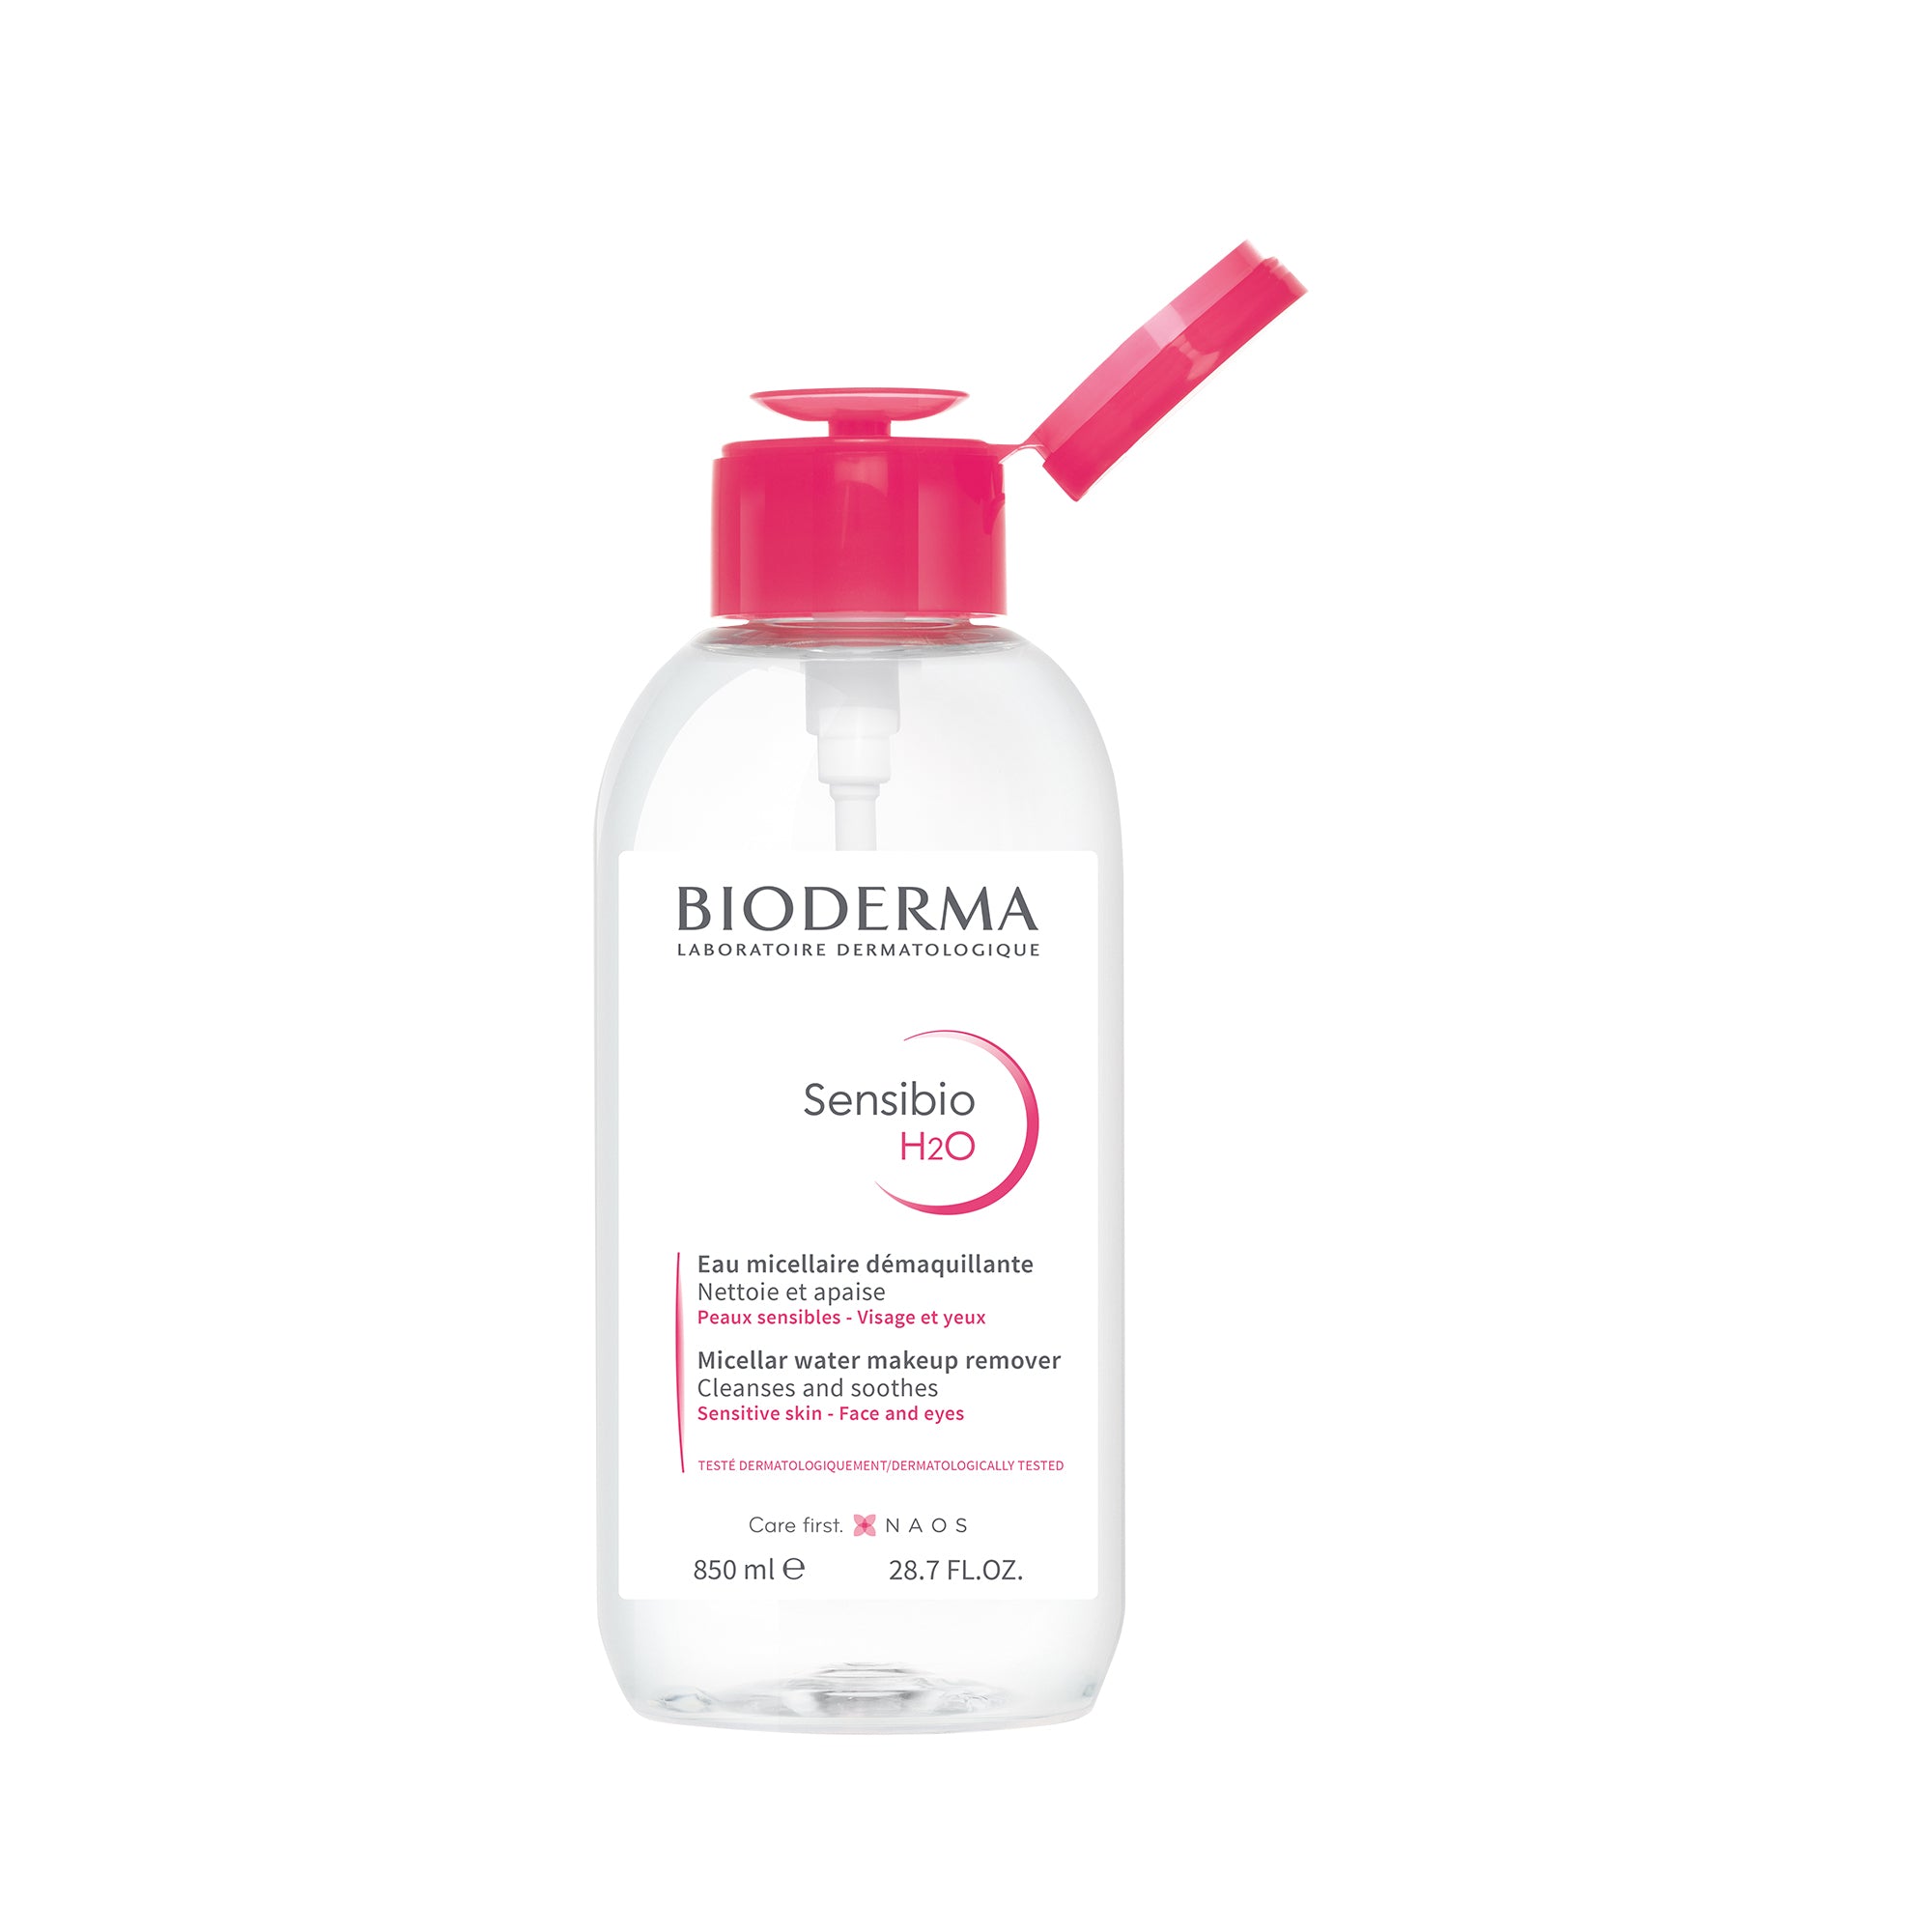 Bioderma Sensibio H2O Micellar water 850ml for Sensitive skin - Reverse Pump